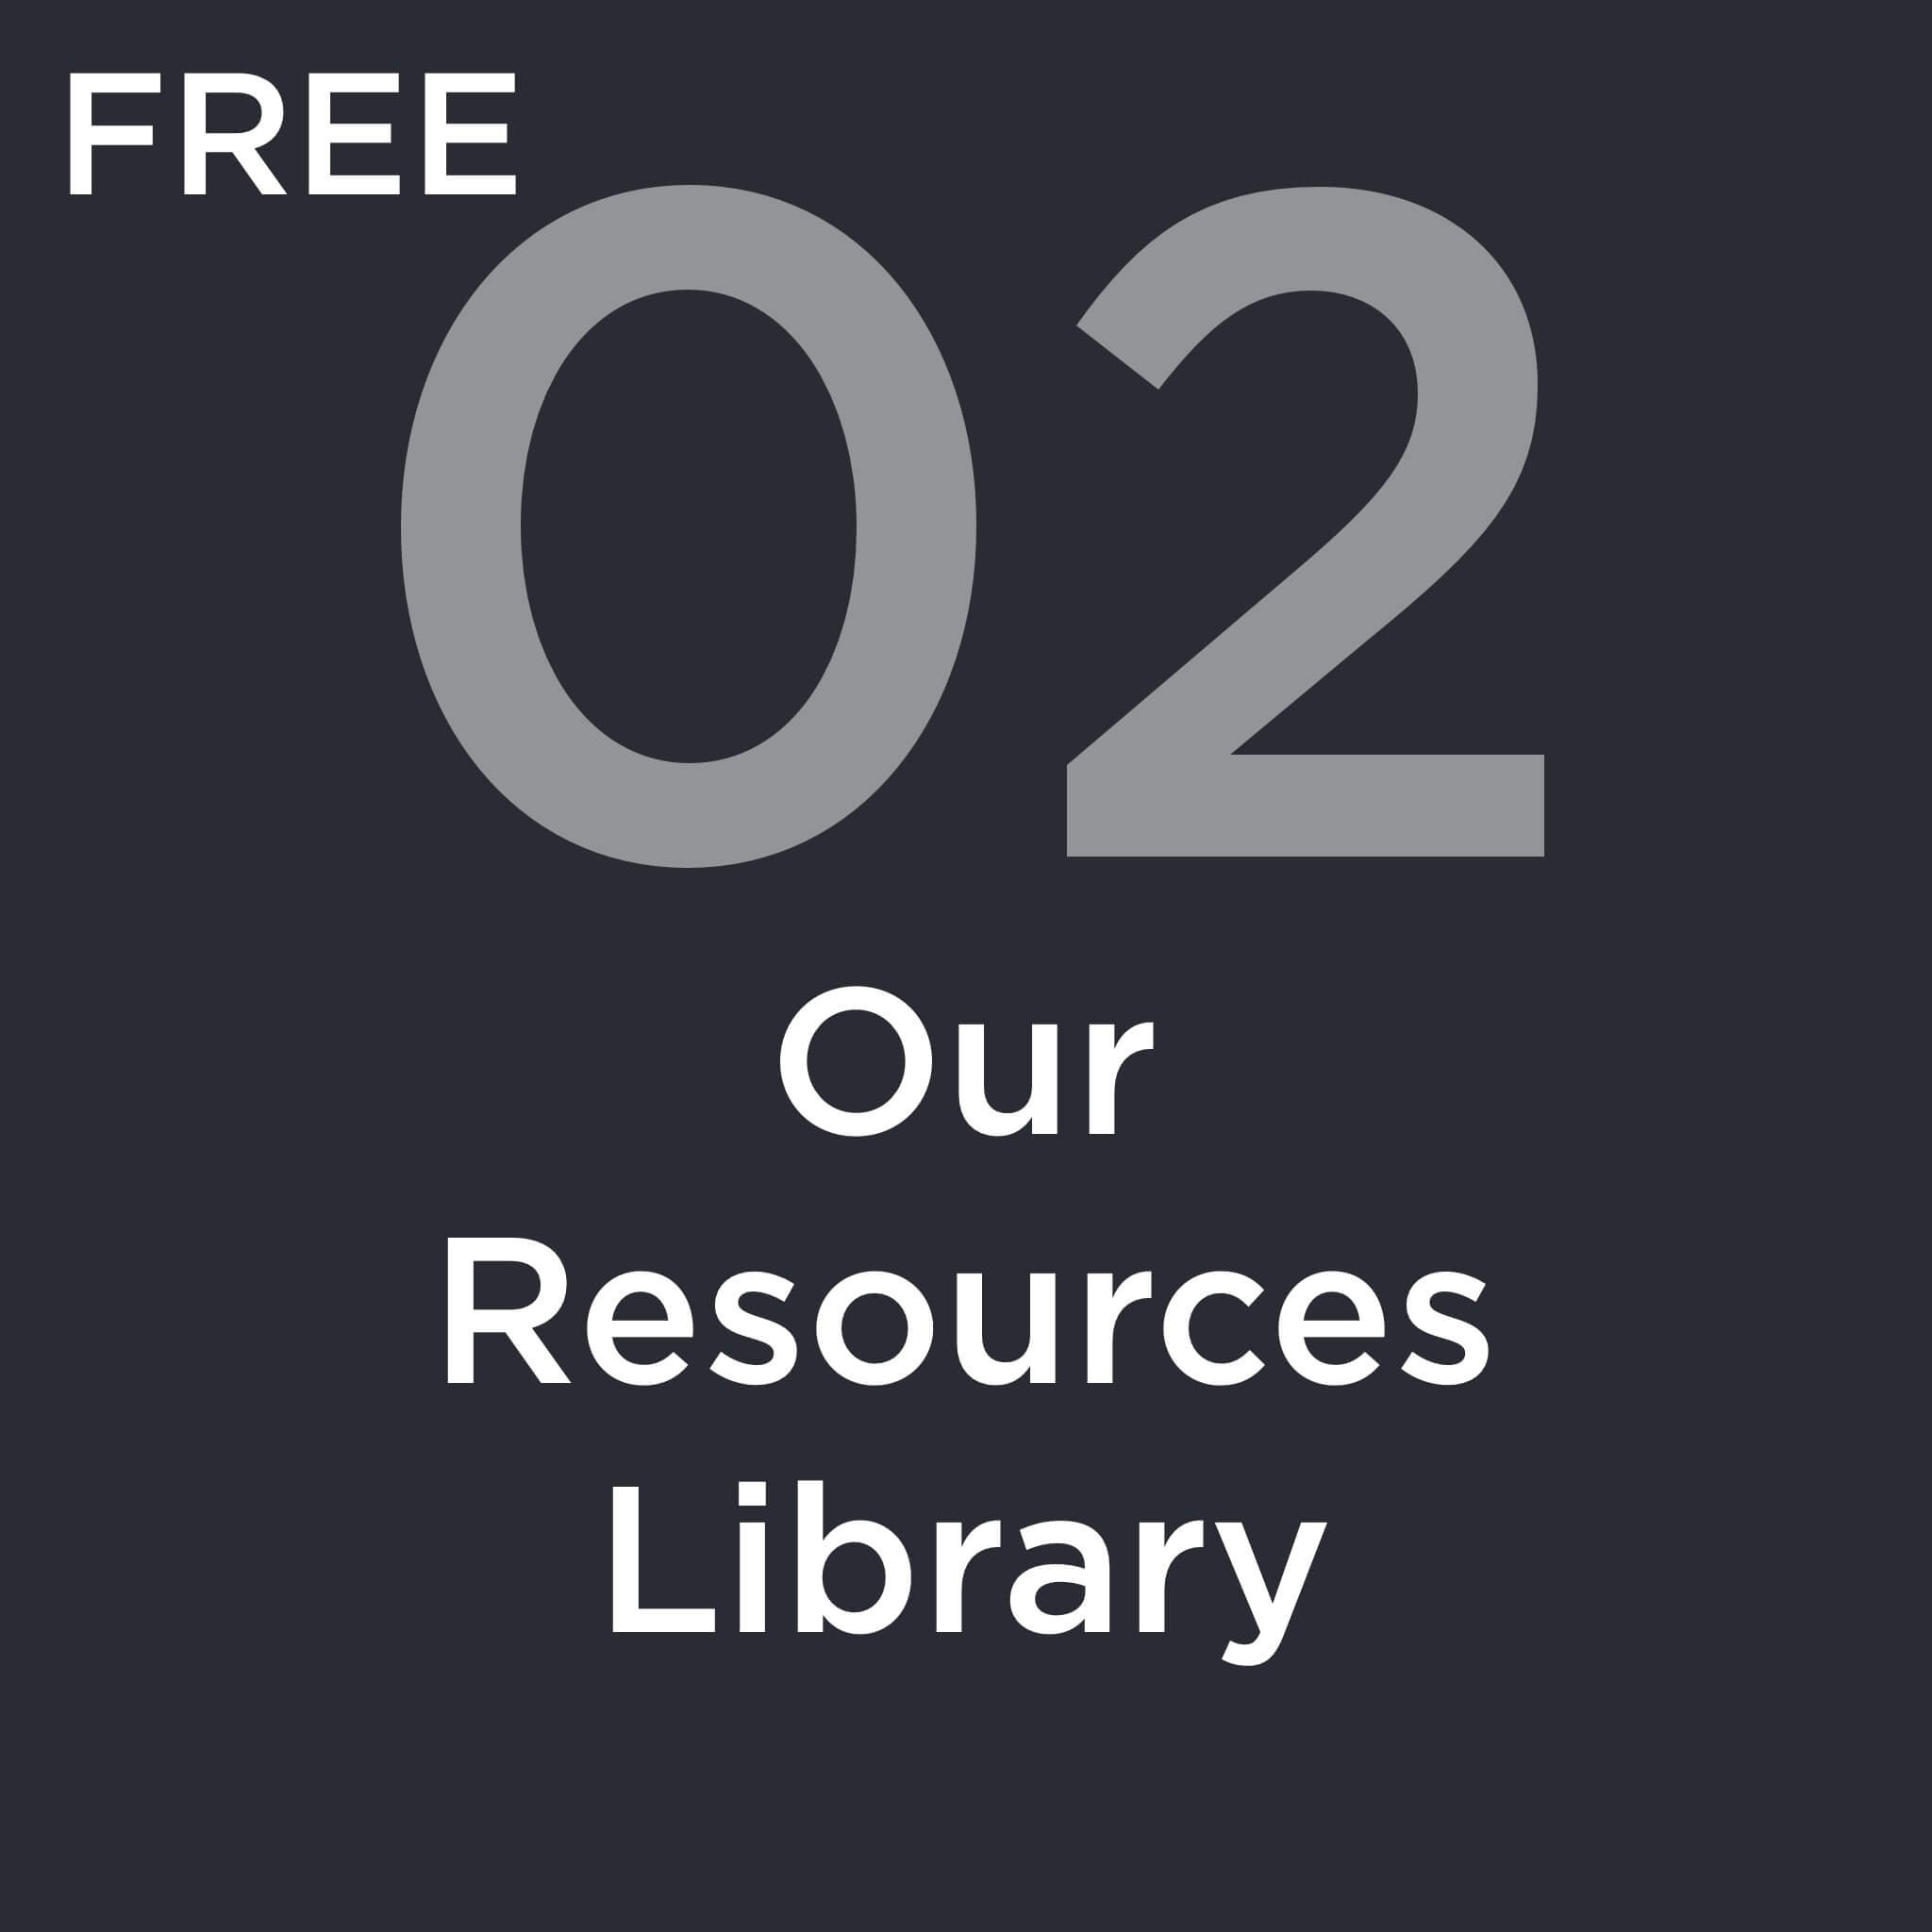 FREE Resurces Library by Sonia Nicolson.jpg